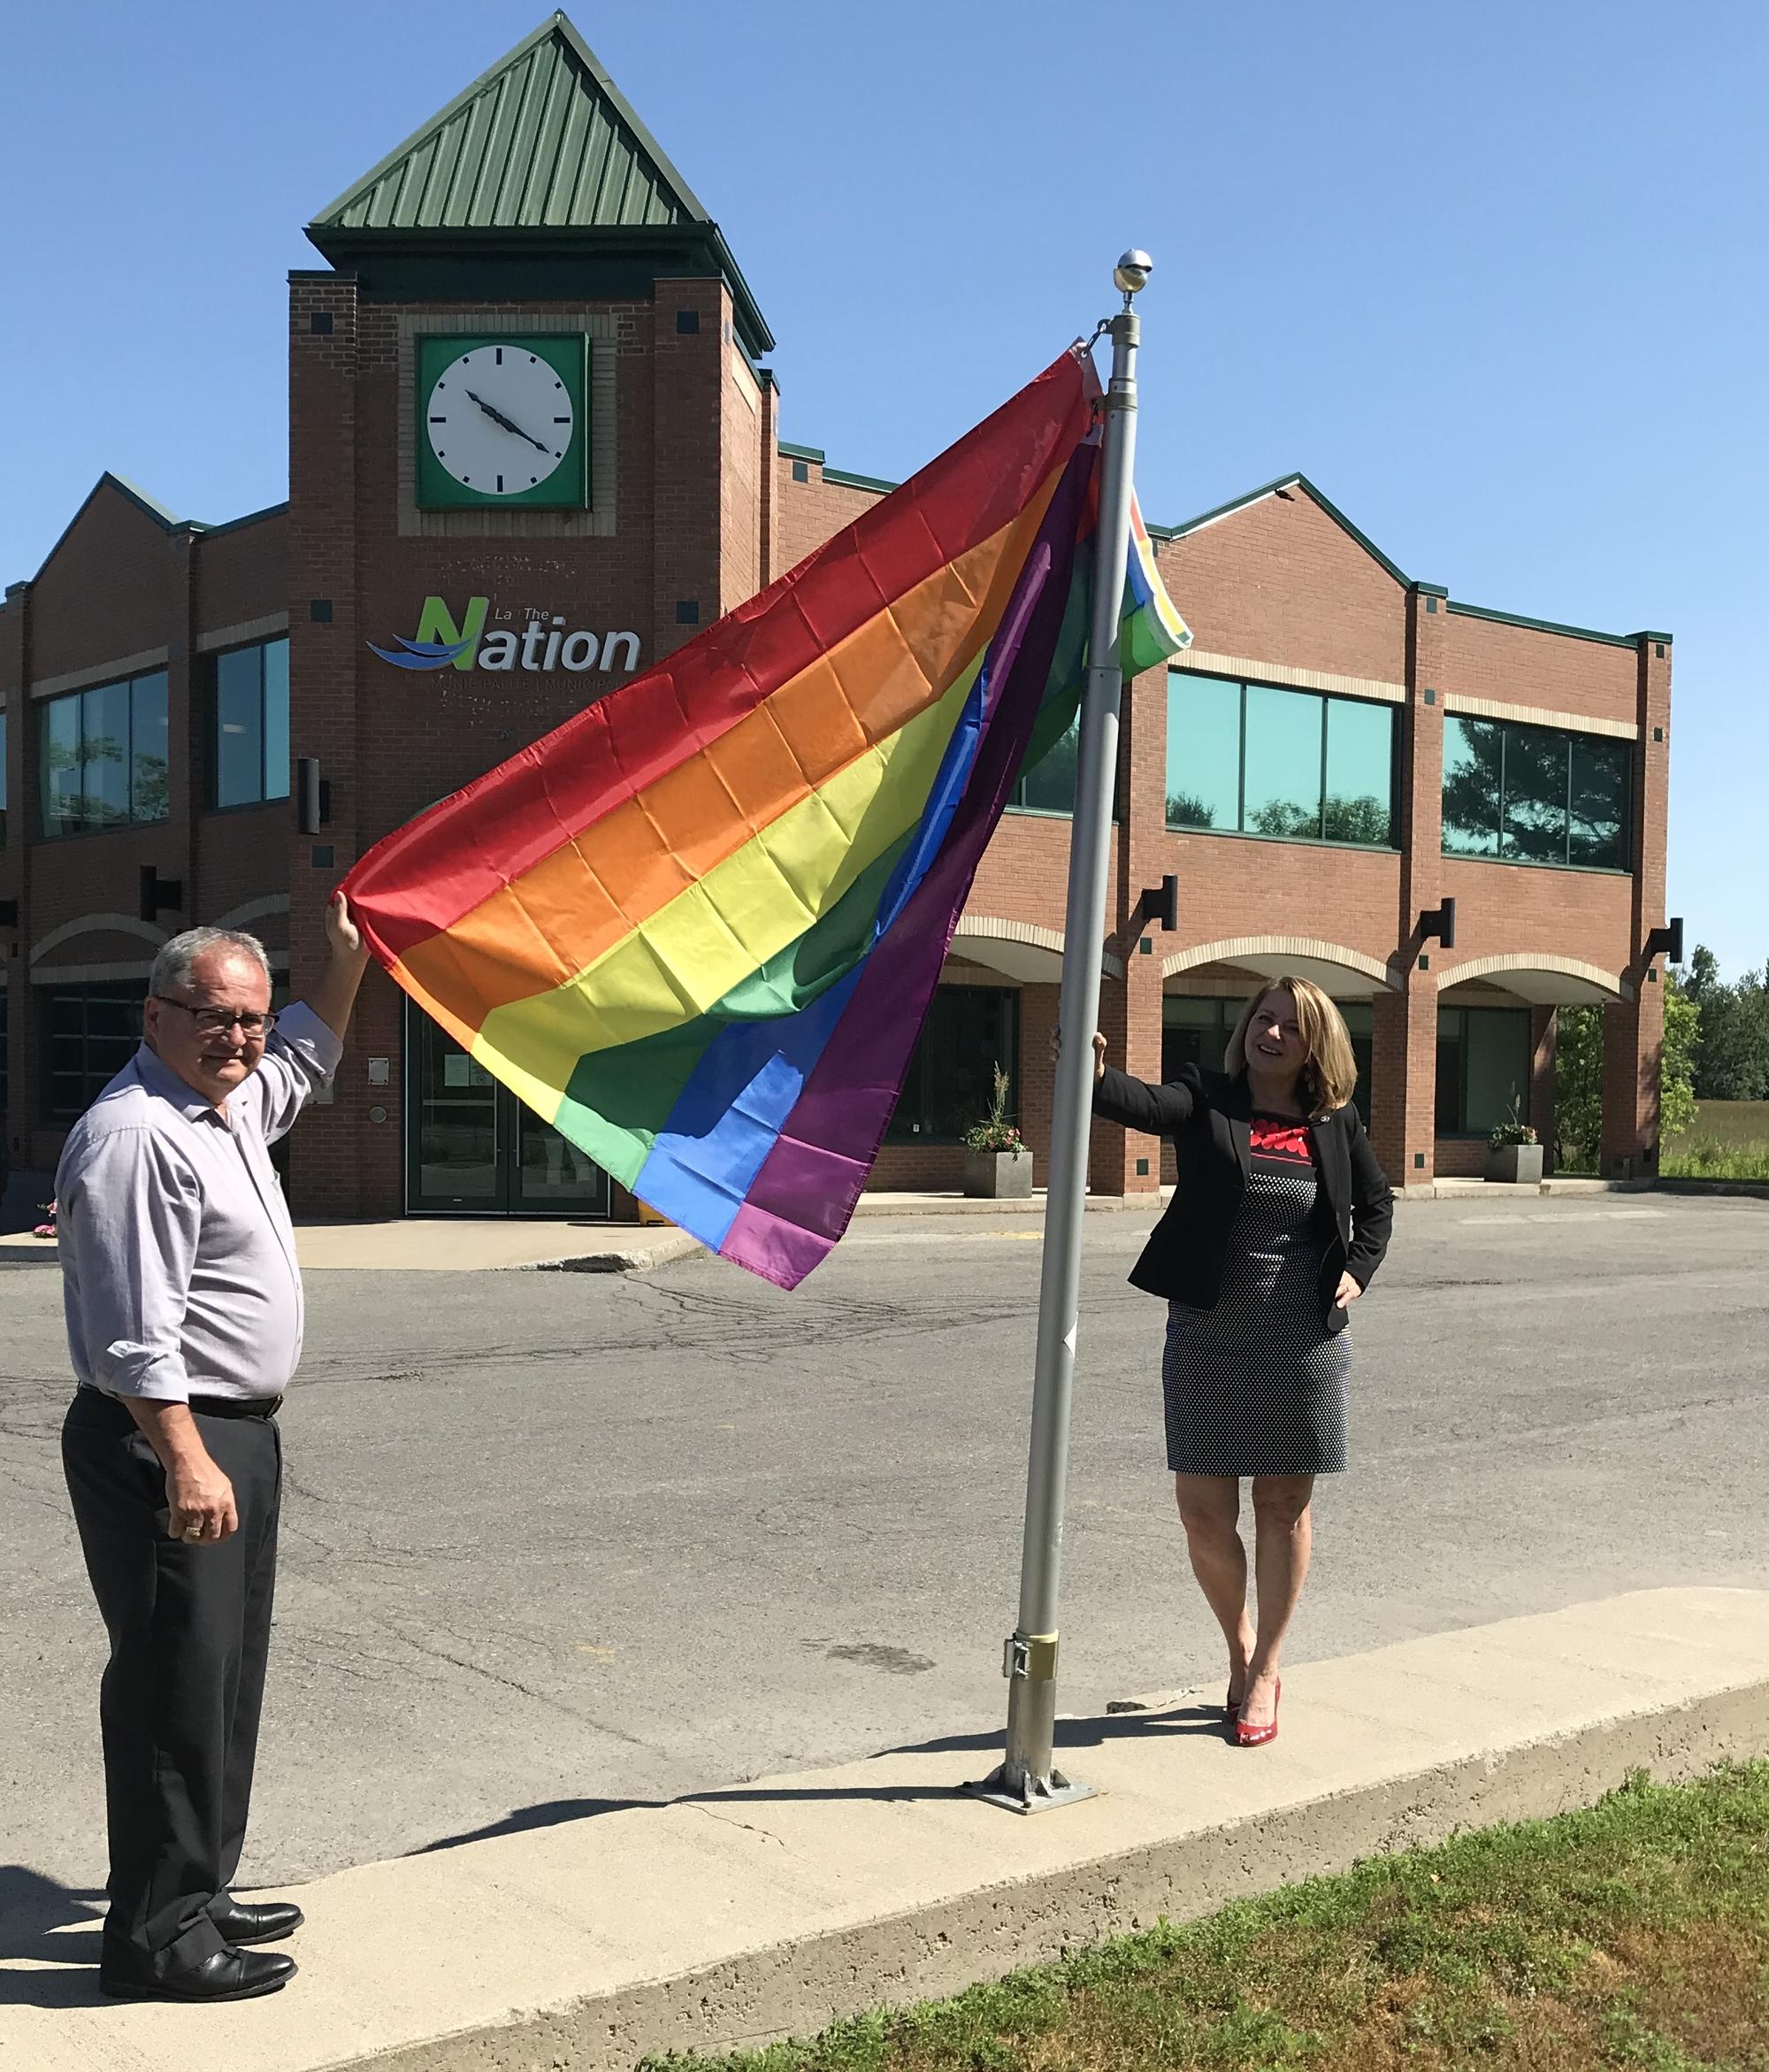 The Nation Municipality raises the Pride flag